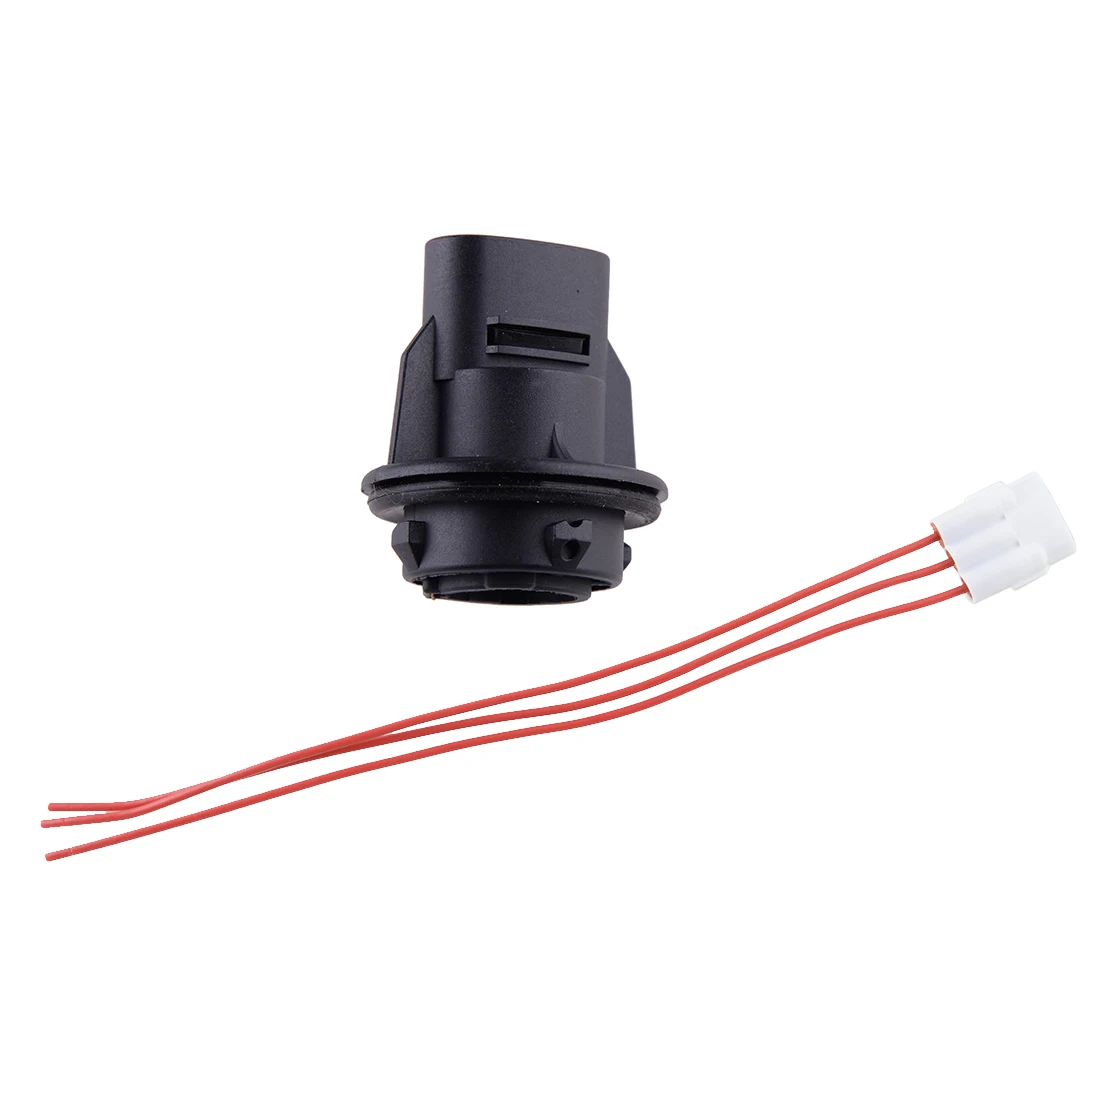 

Car Turn Signal Blinker Bulb Socket & Connector Harness Set X33302-SR3-A01 33302-ST7-A1 Fit for Acura Honda Civic CR-V Crosstour